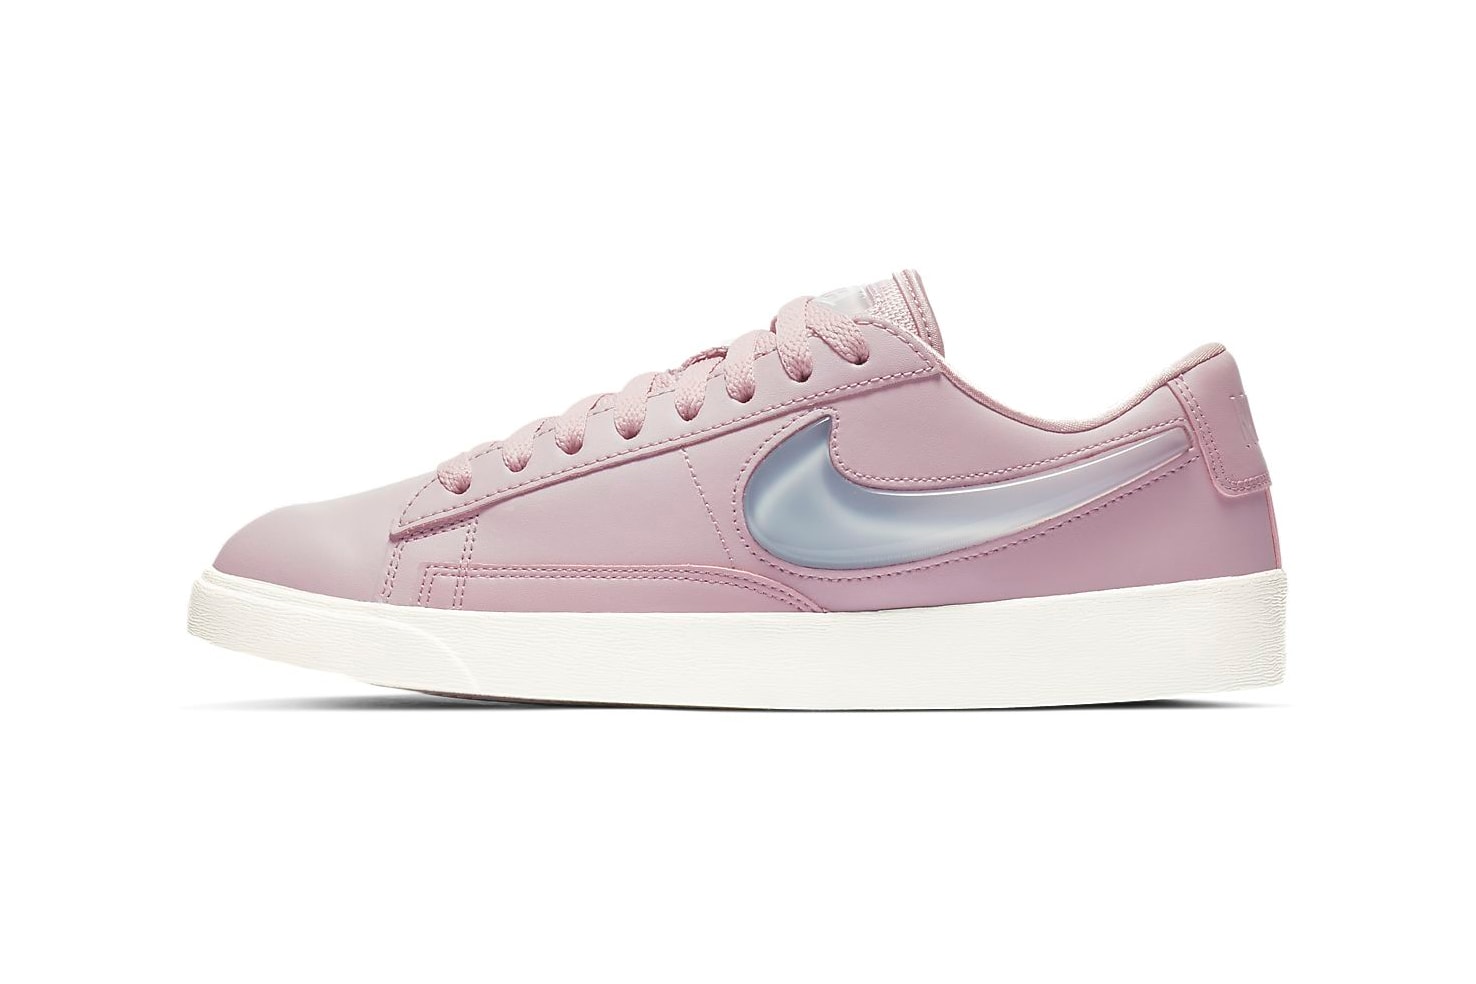 Nike Blazer Low Plum Chalk Premium Pink Sneakers Trainers